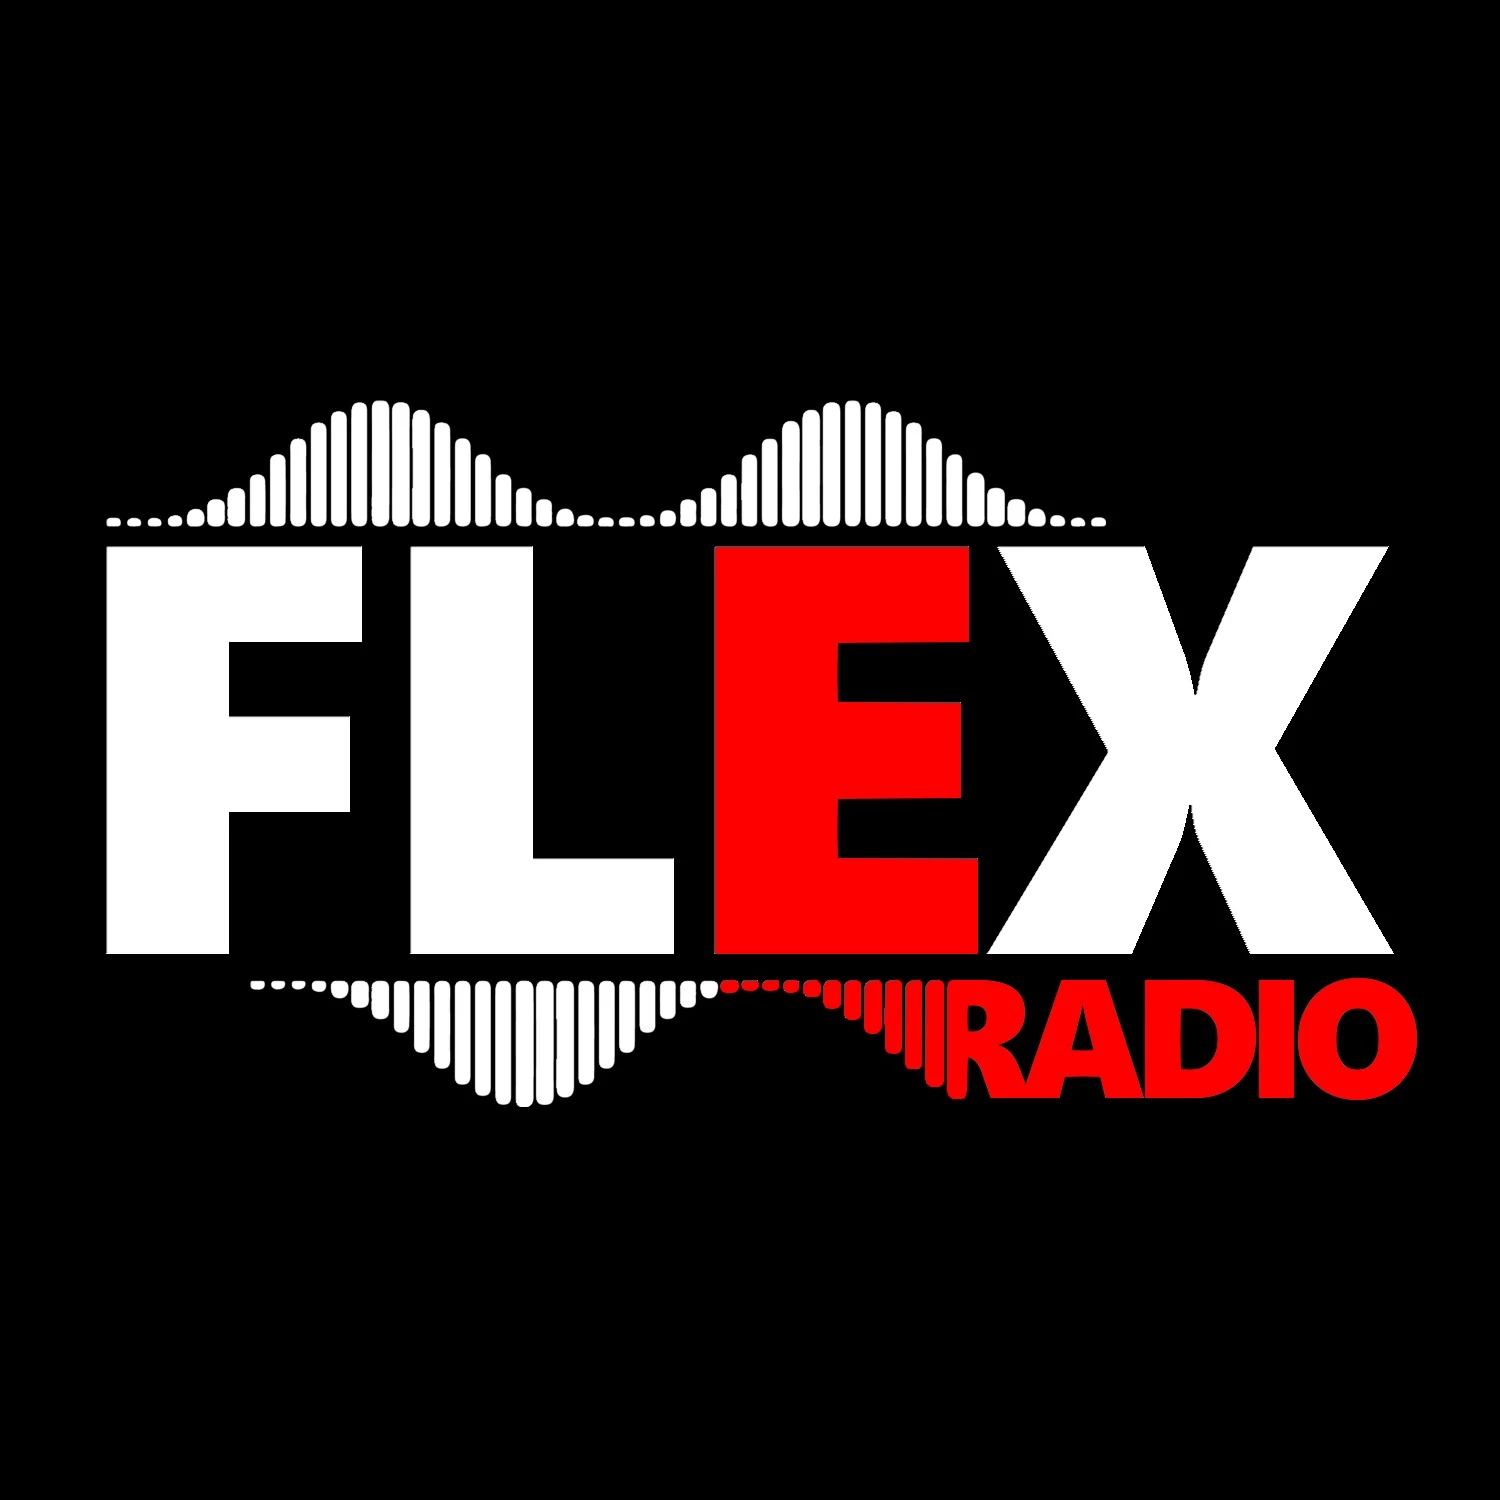 Flex Radio